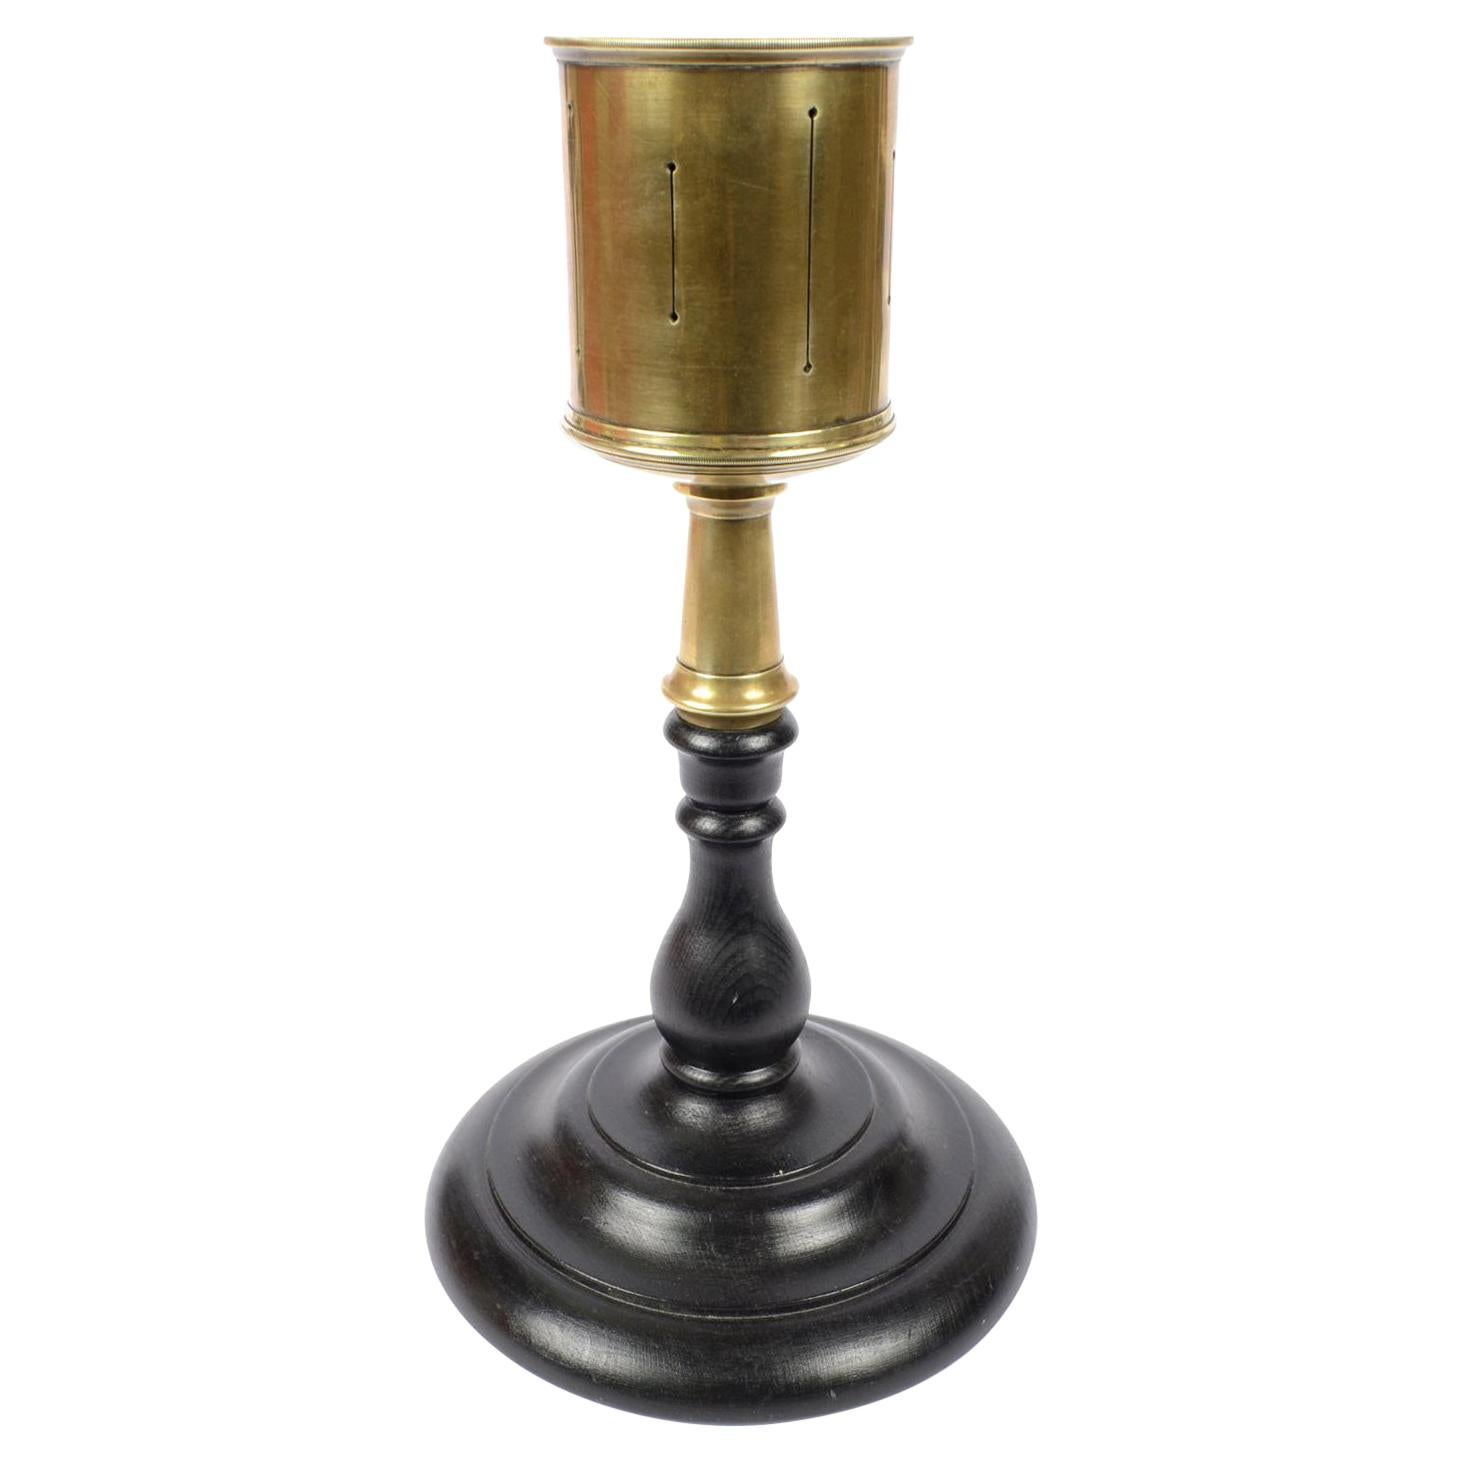 1850 Italian Brass Square Measurement Surveyor Instrument, Scientific Instrument